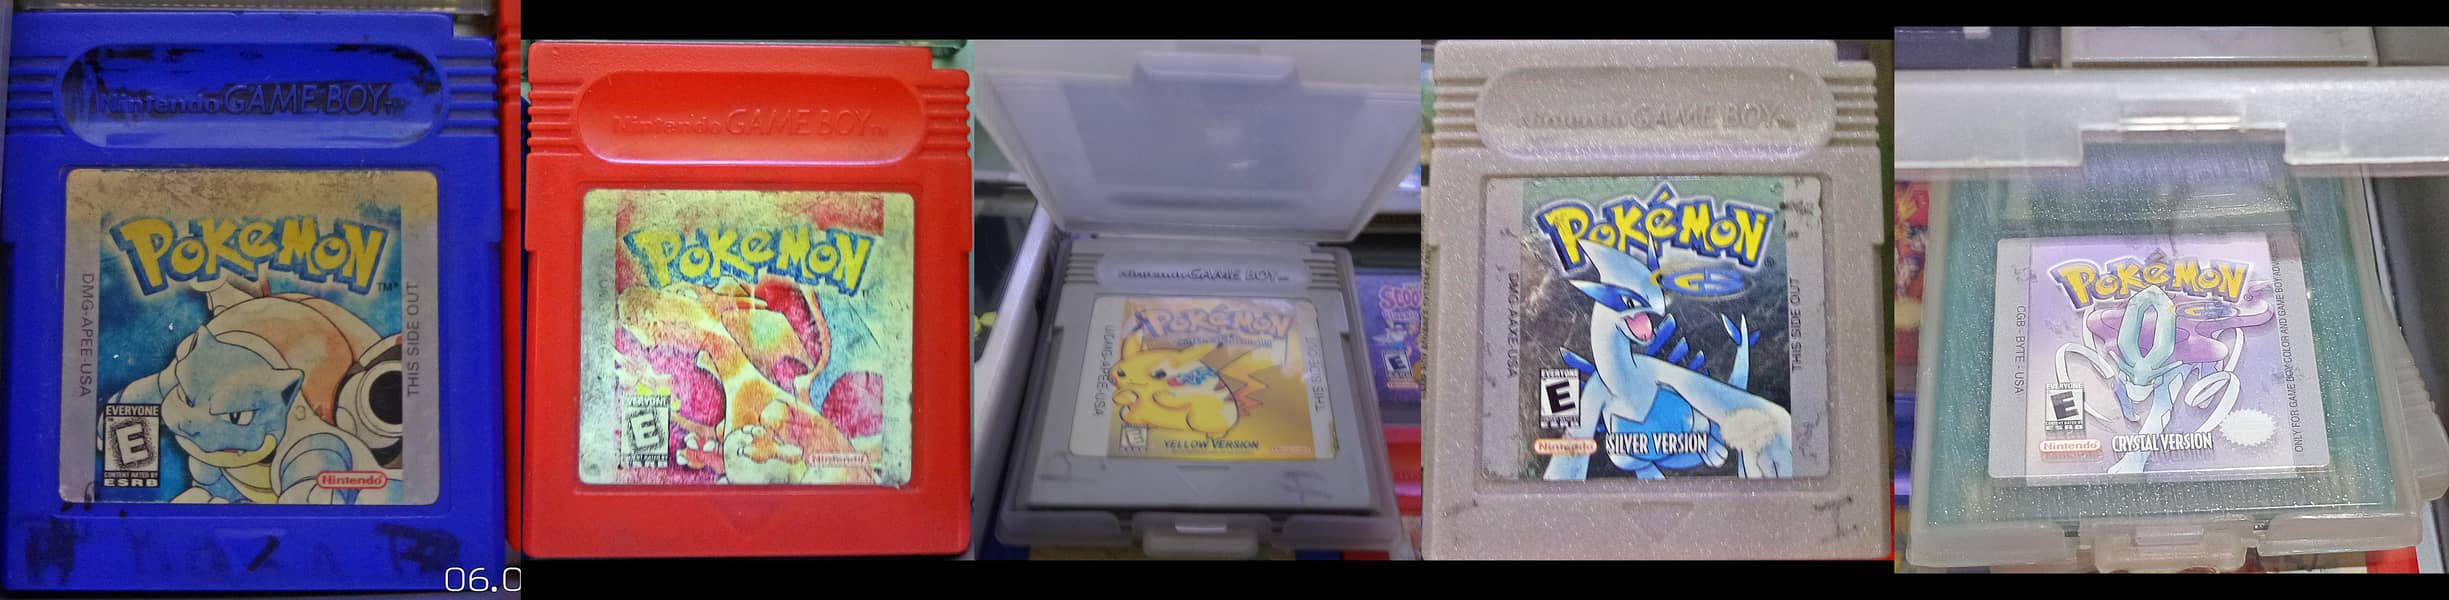 Nintendo Game Boy / Pokemon collection. 2